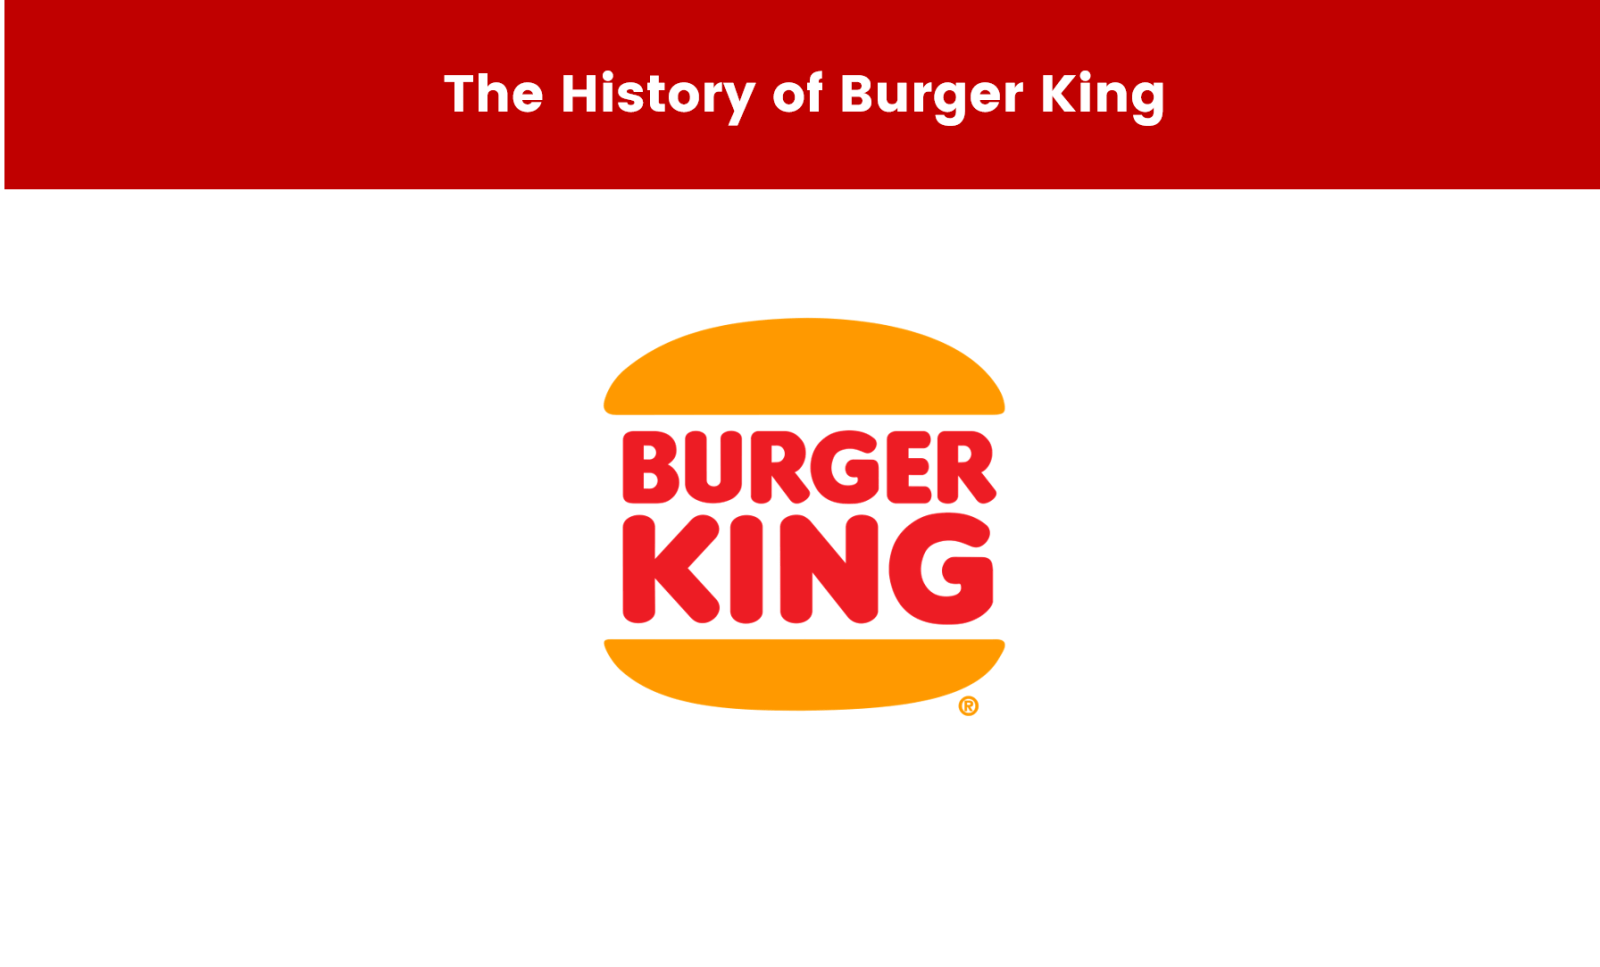 The History of Burger King